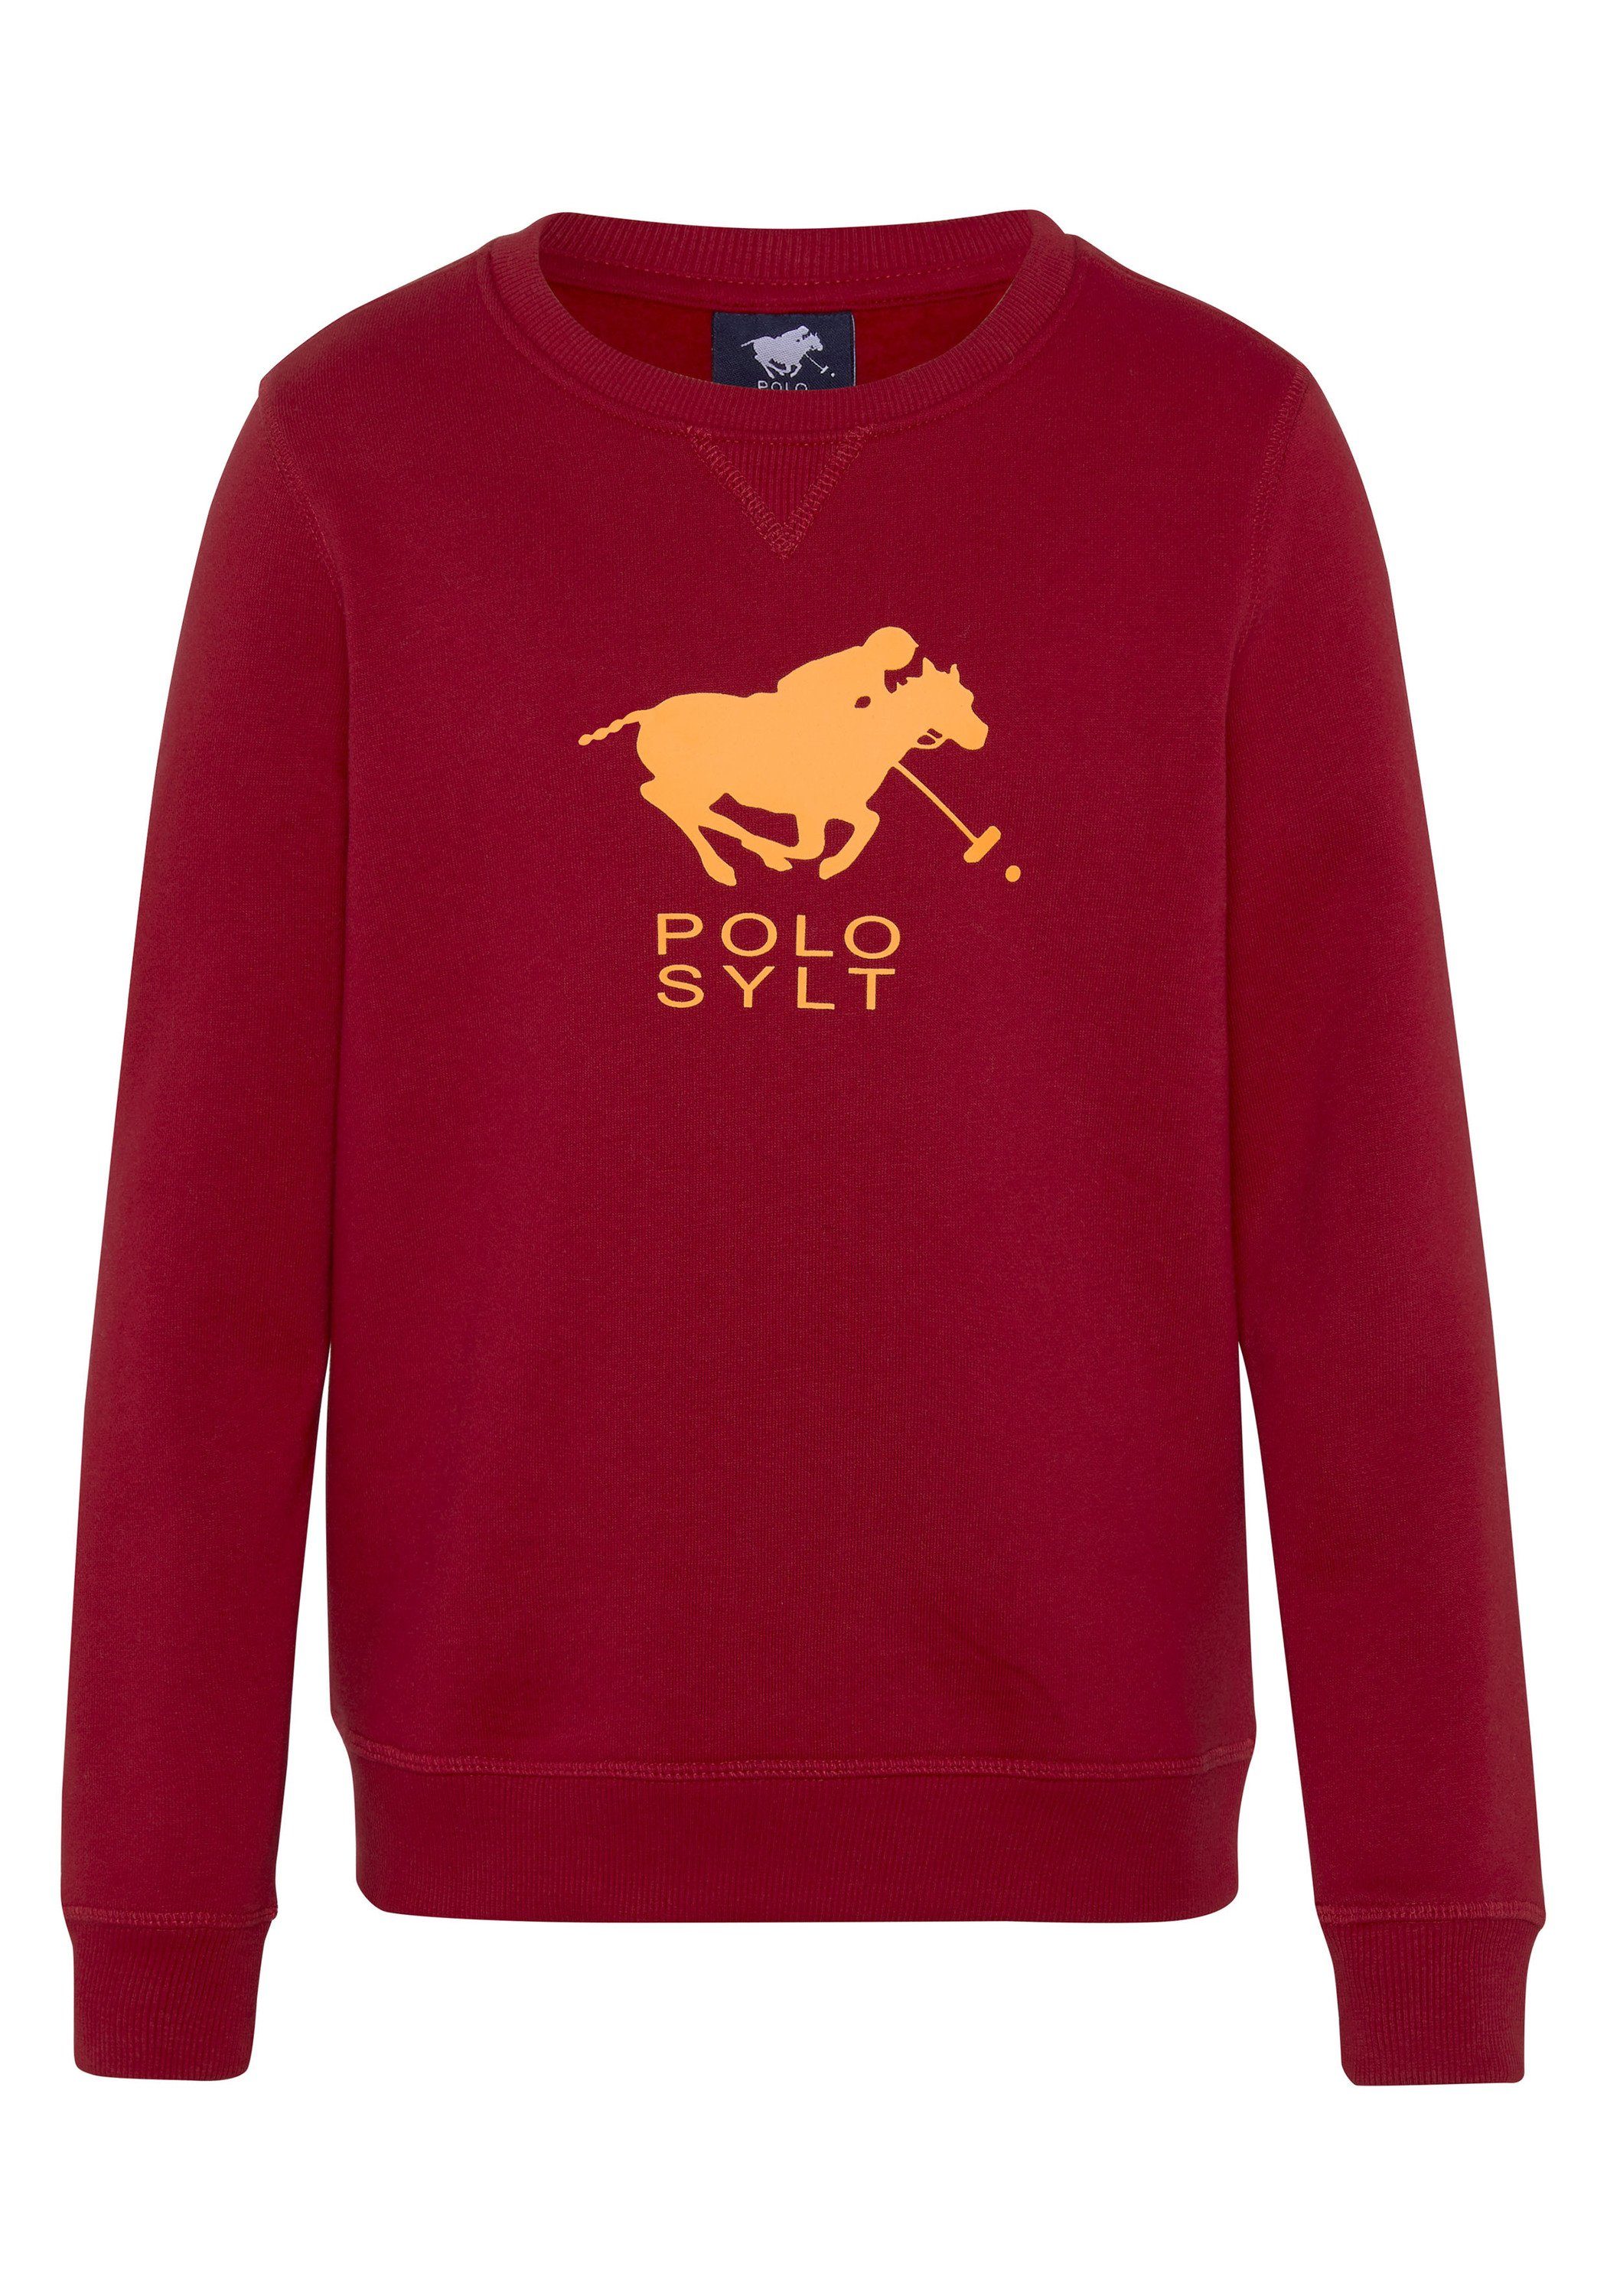 Polo Sylt Sweatshirt mit Label-Print Chili Pepper